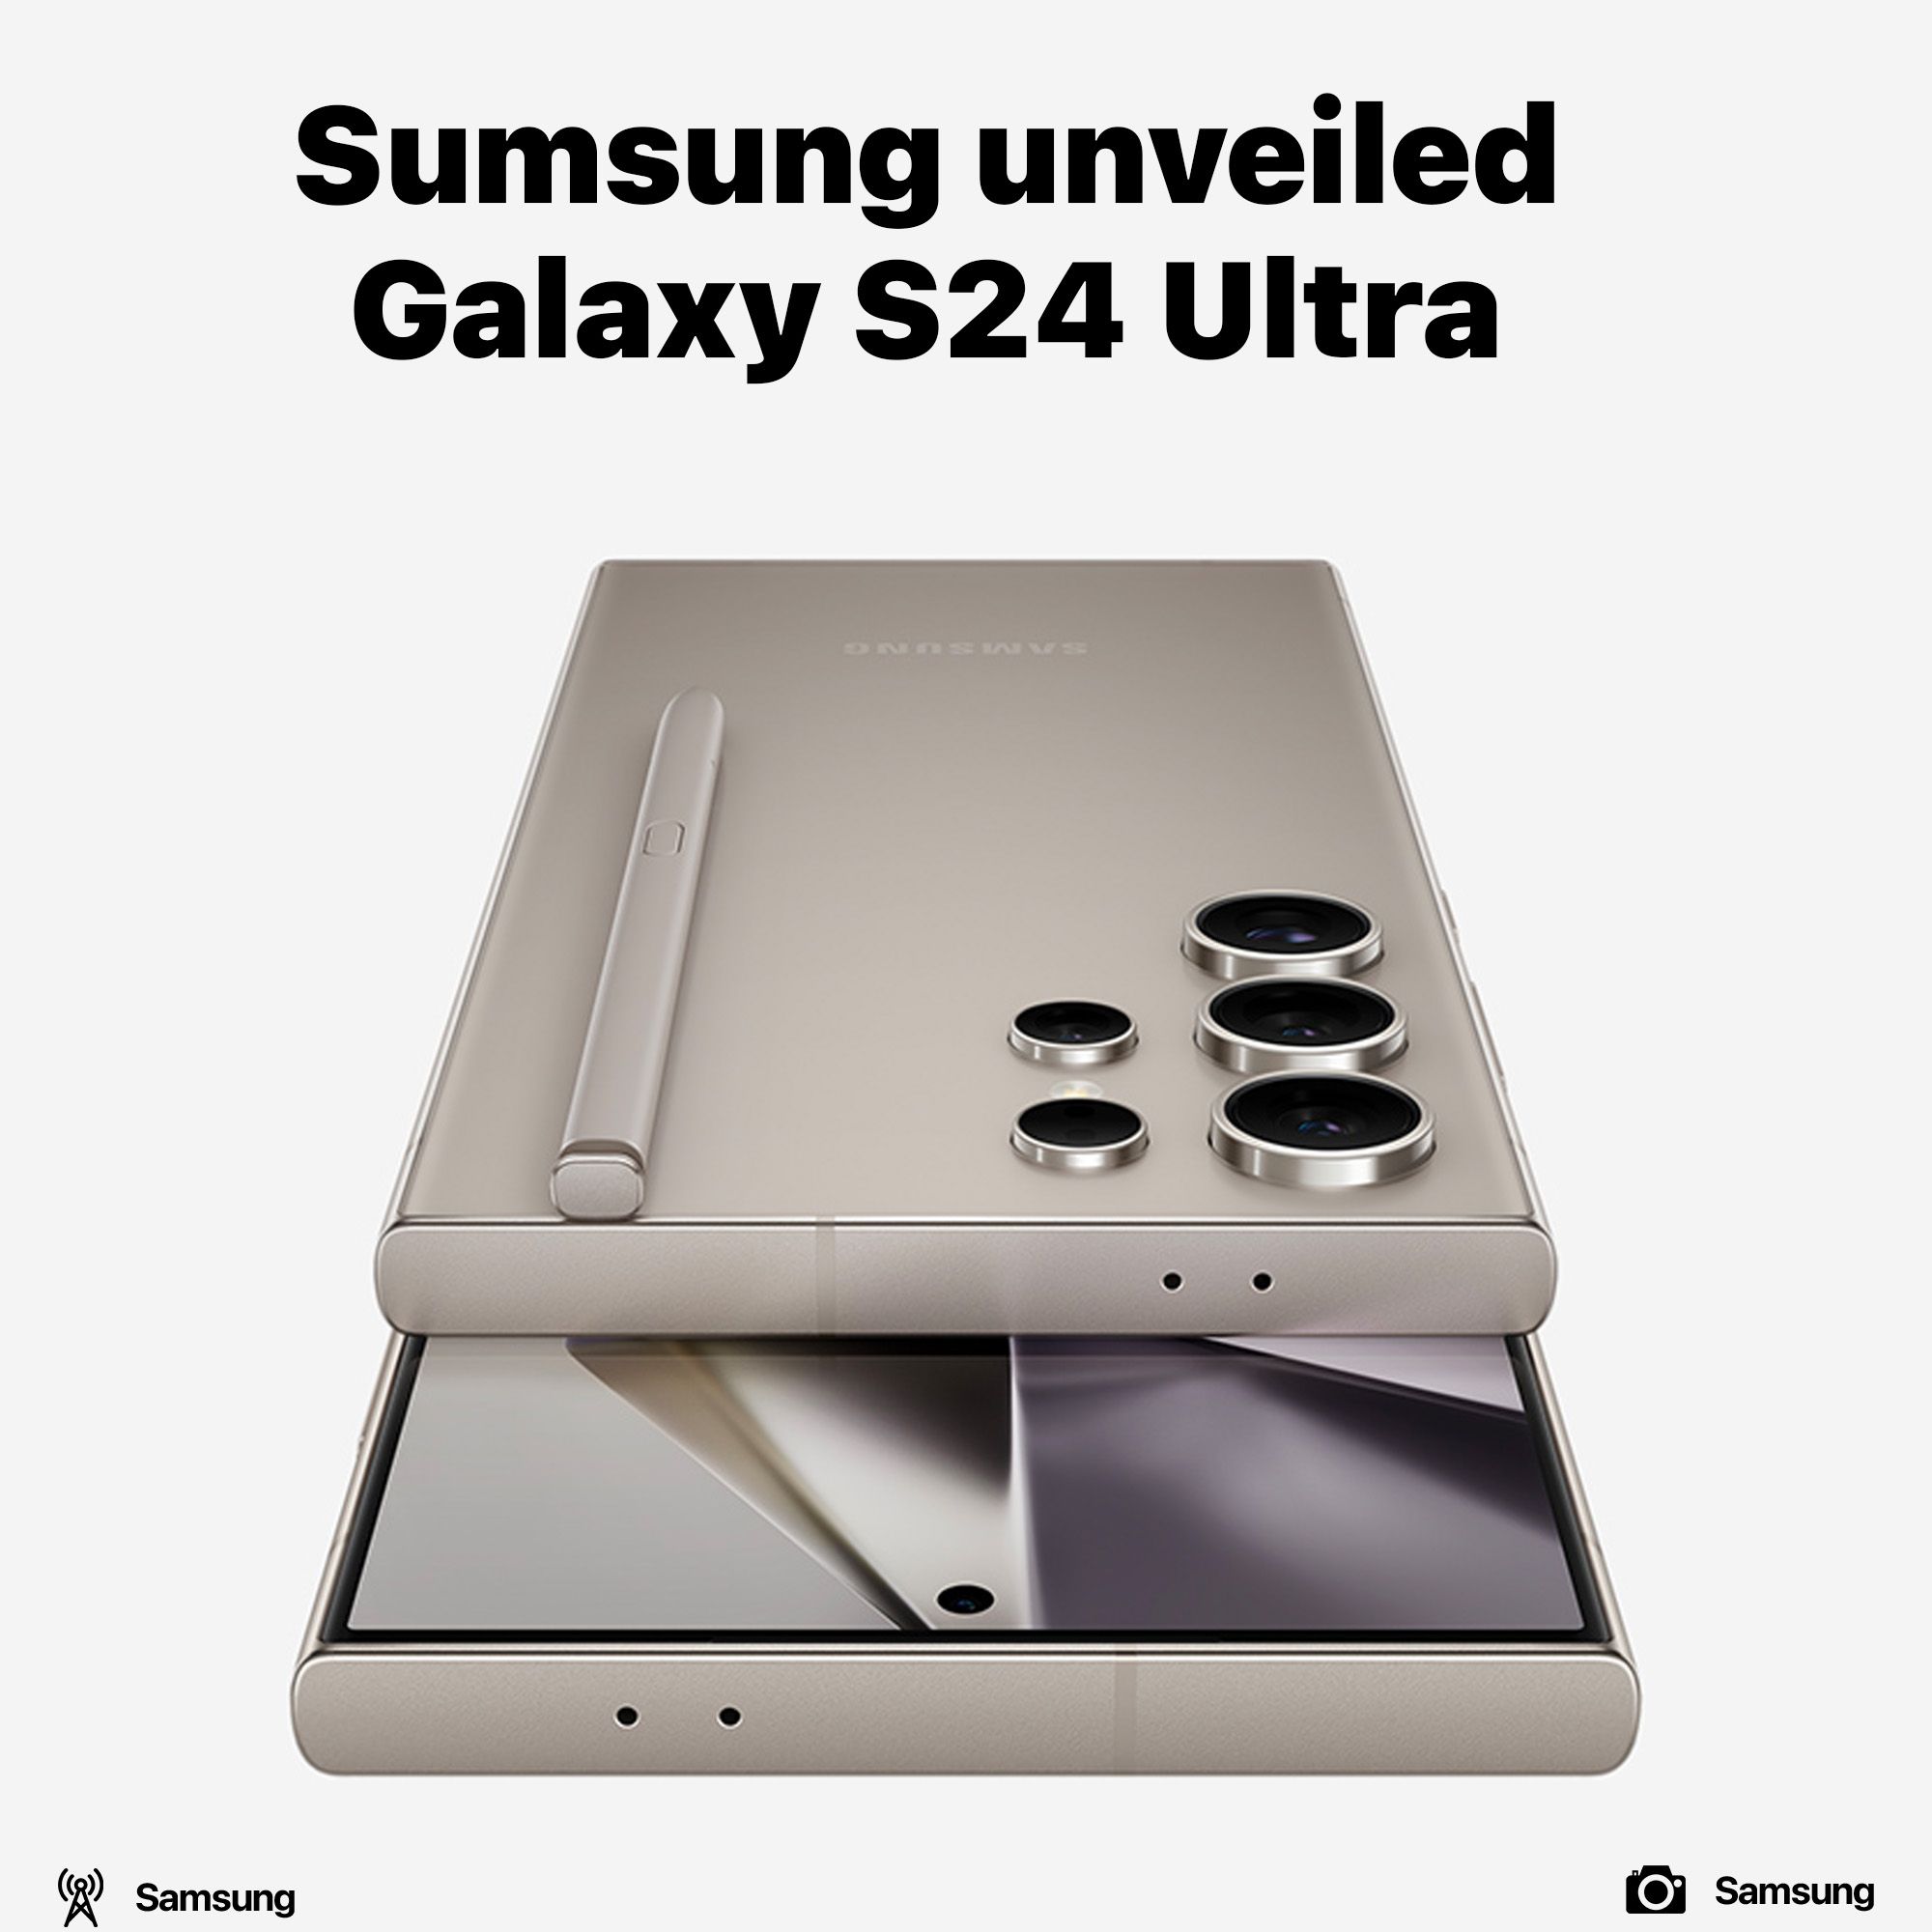 Samsung unveiled Galaxy S24 Ultra